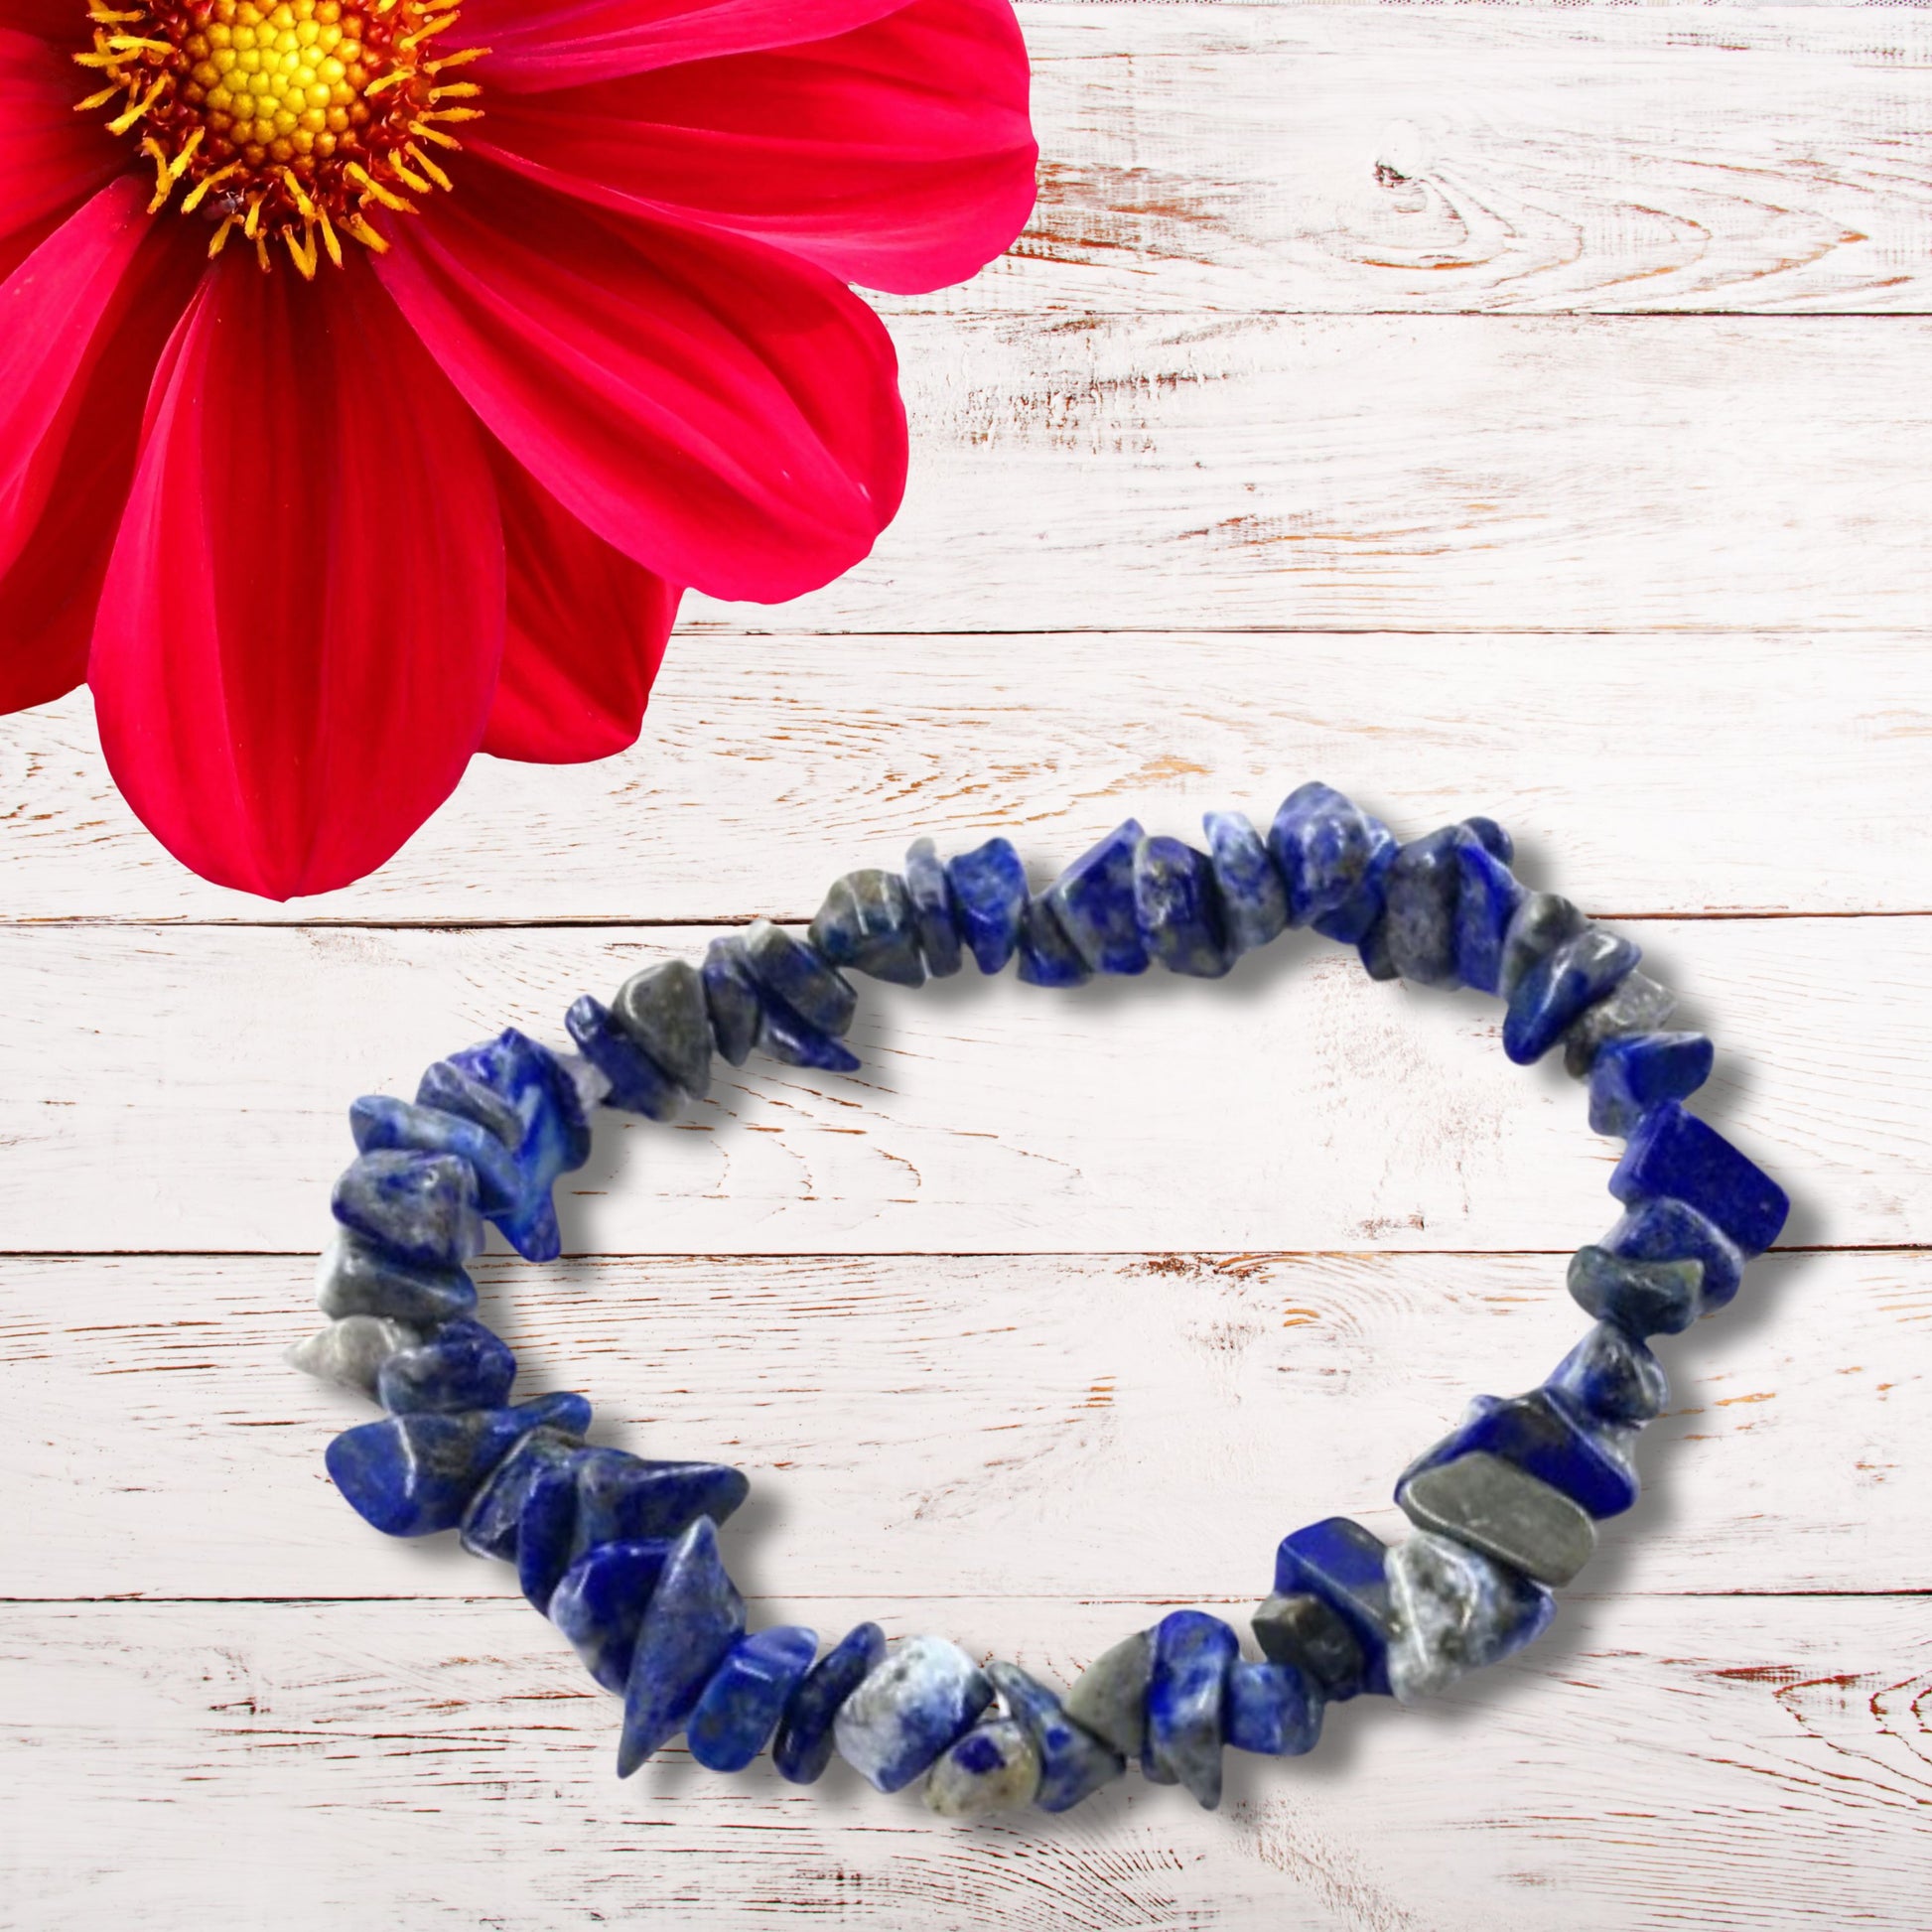 Natural Healing Pure Blue Lapis Lazuli Stretch Bracelet